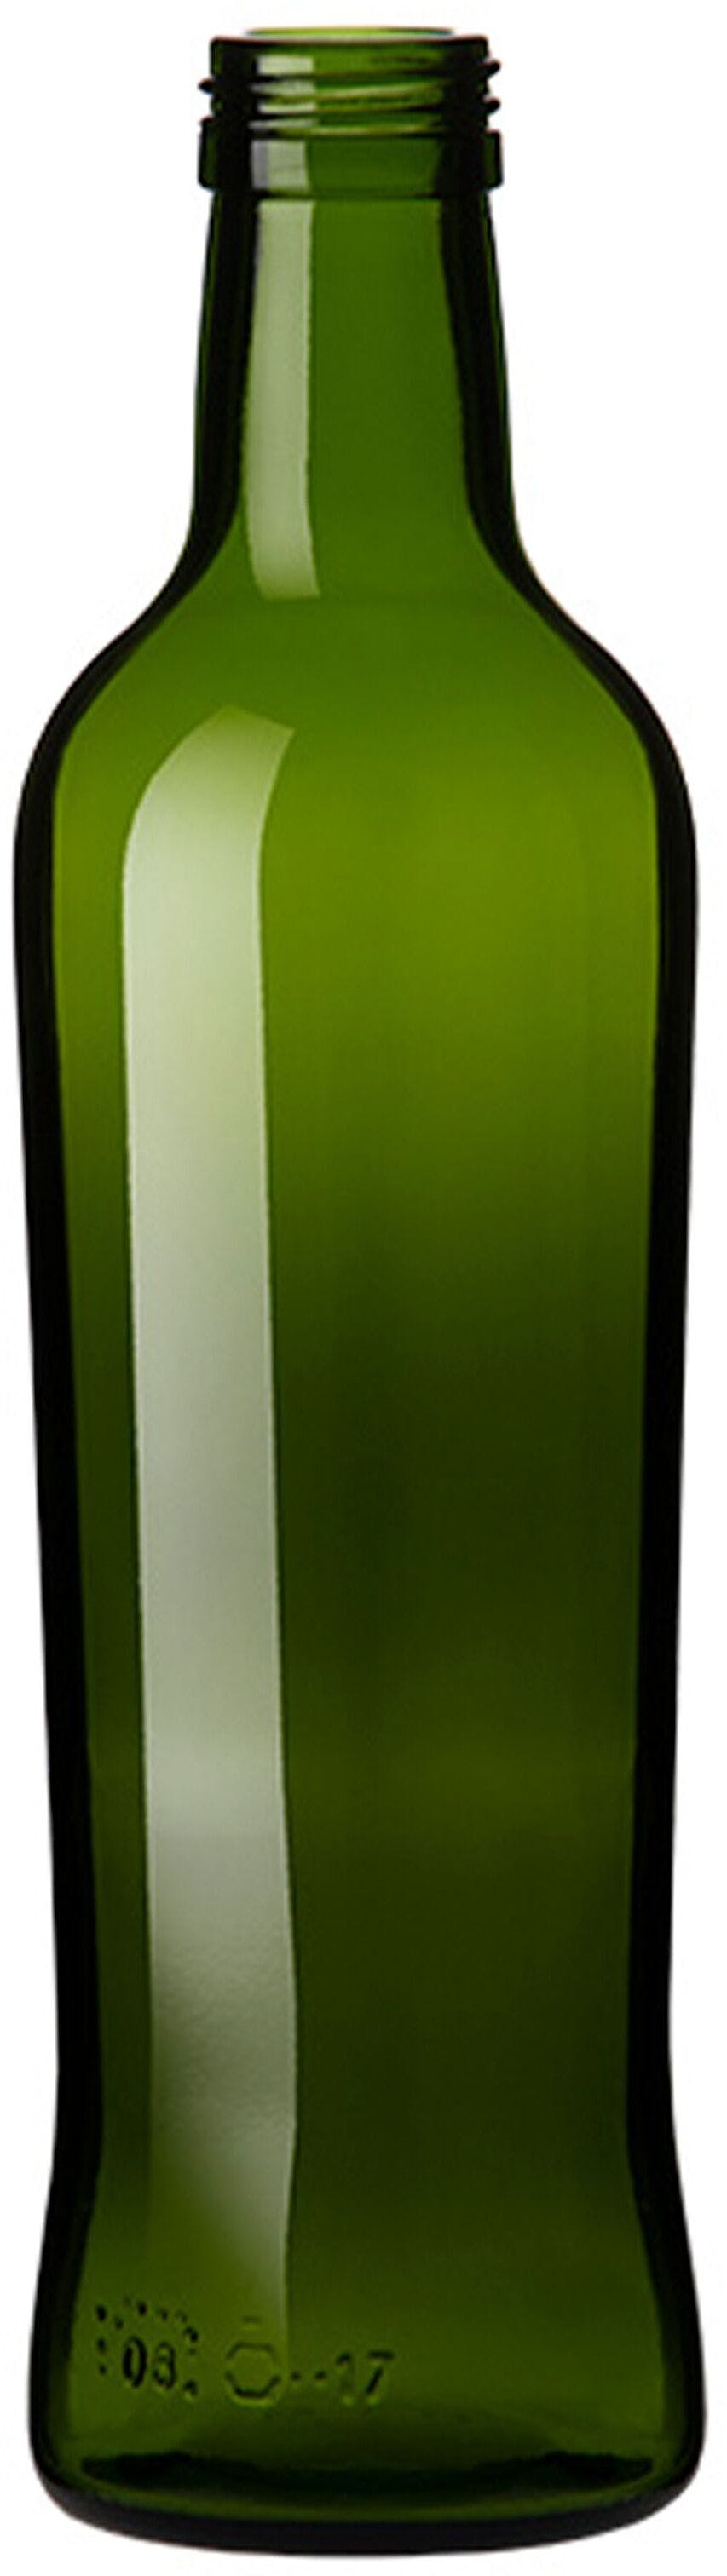 Bottiglie per Olio - buyglass